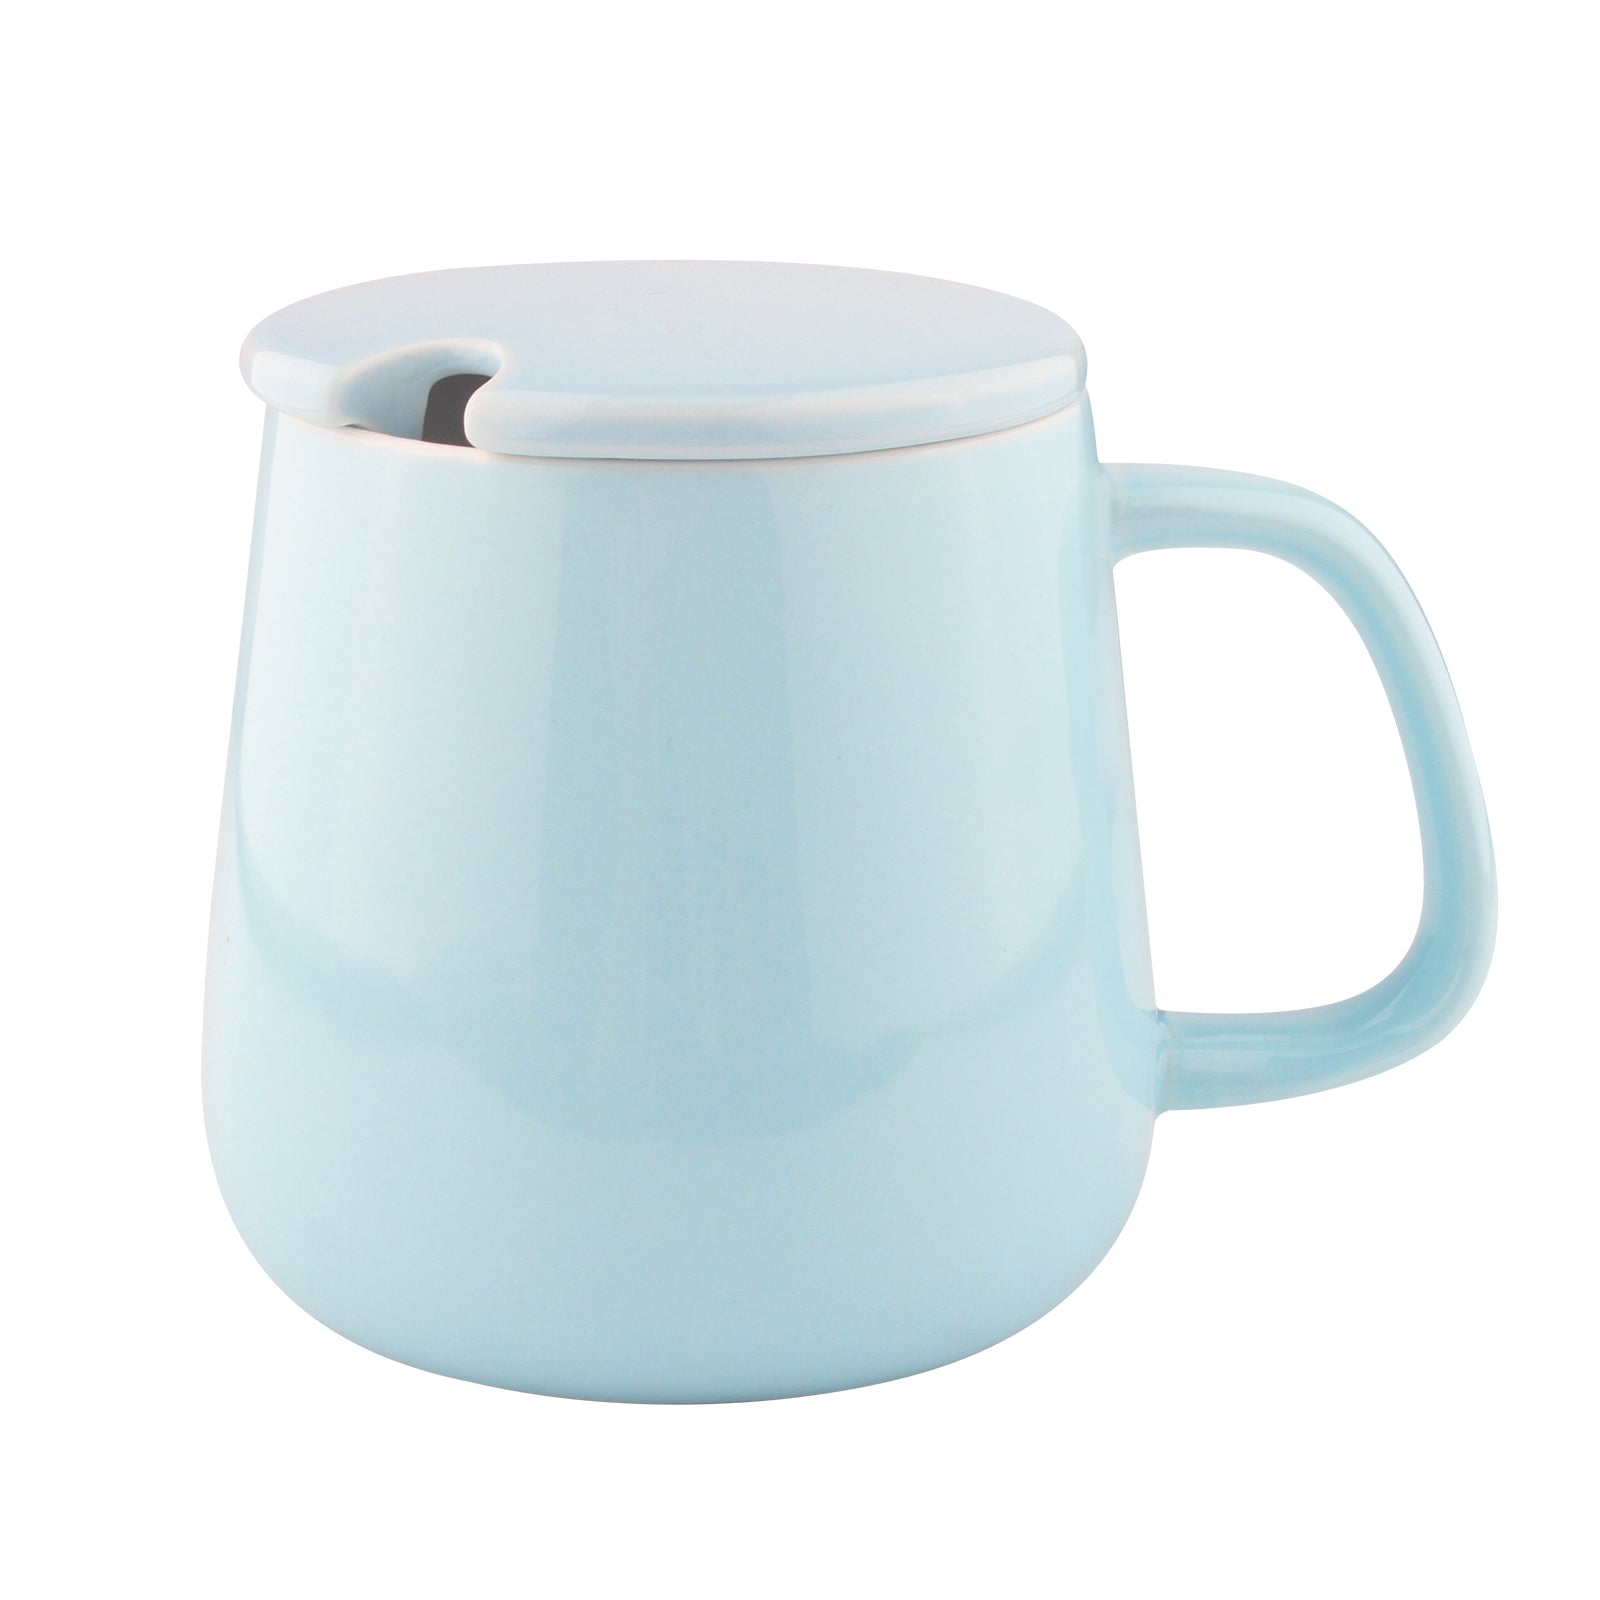 VOBAGA  Loose Leaf Tea Cup, 14 OZ Coffee&Tea Mug with Lid and Flat-Bottom, Gifts for Tea Lover (Pink)